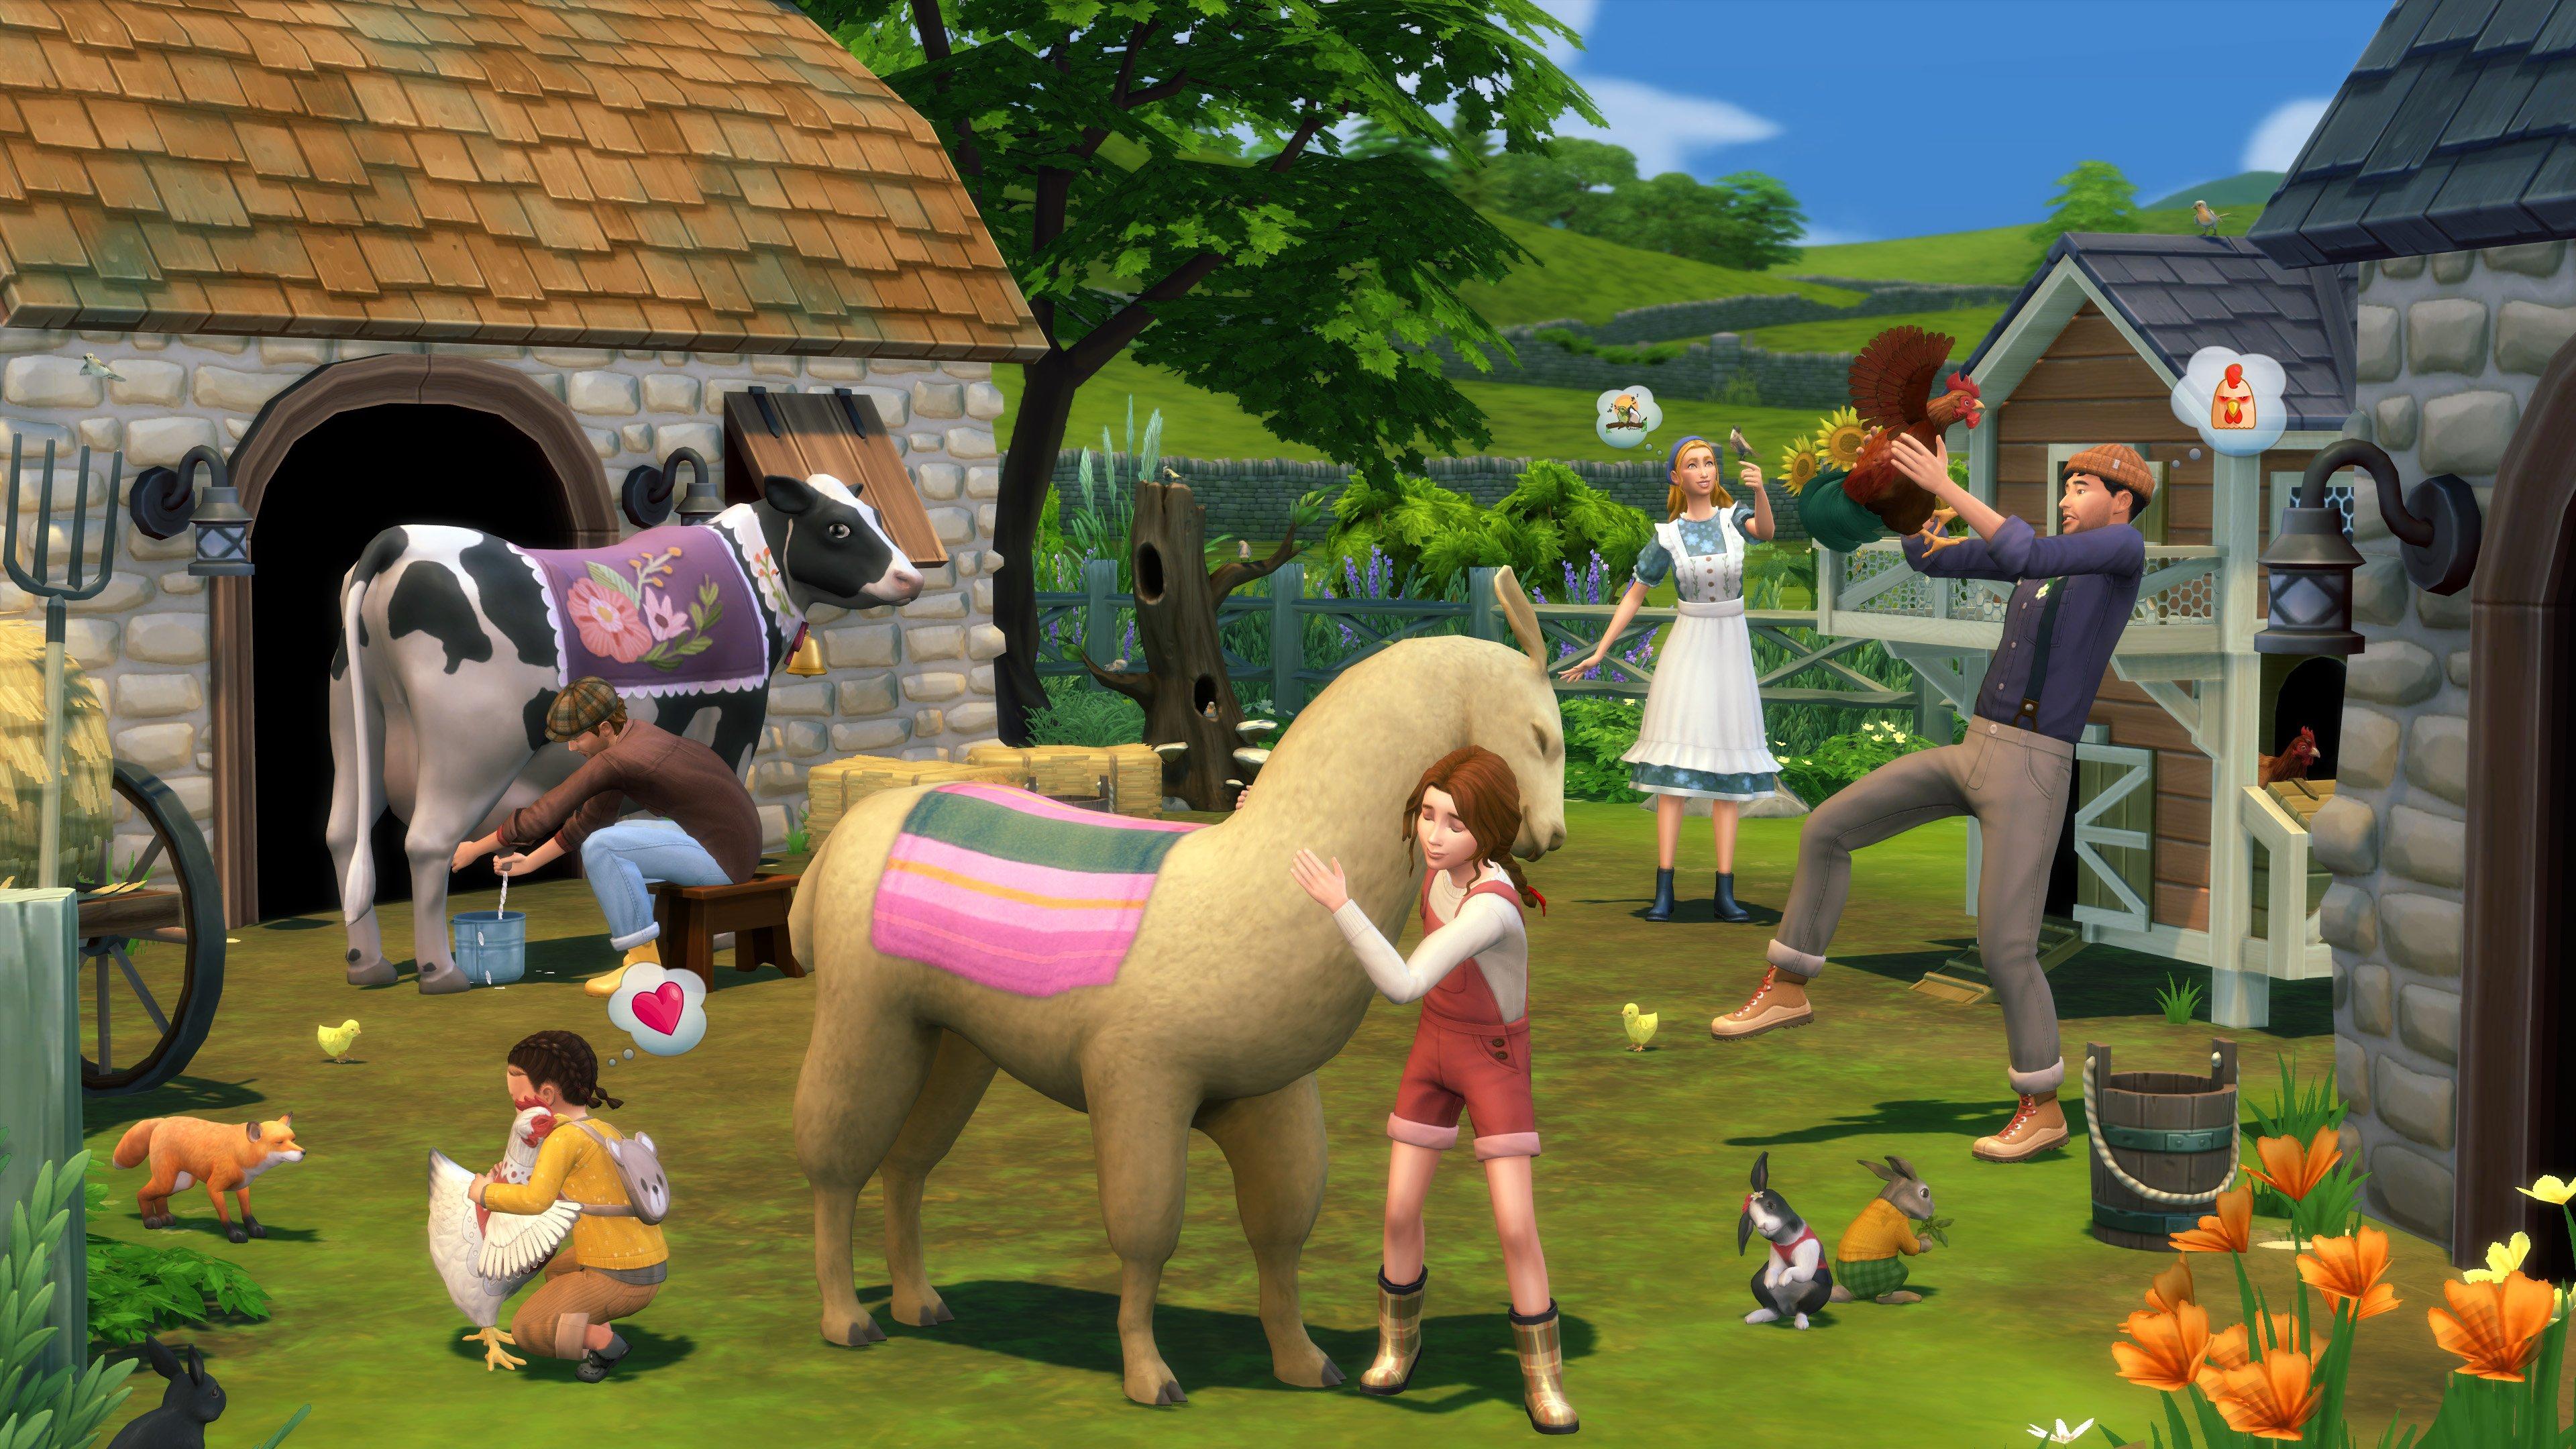 The Sims 4 Cottage Living PC Origin DLC